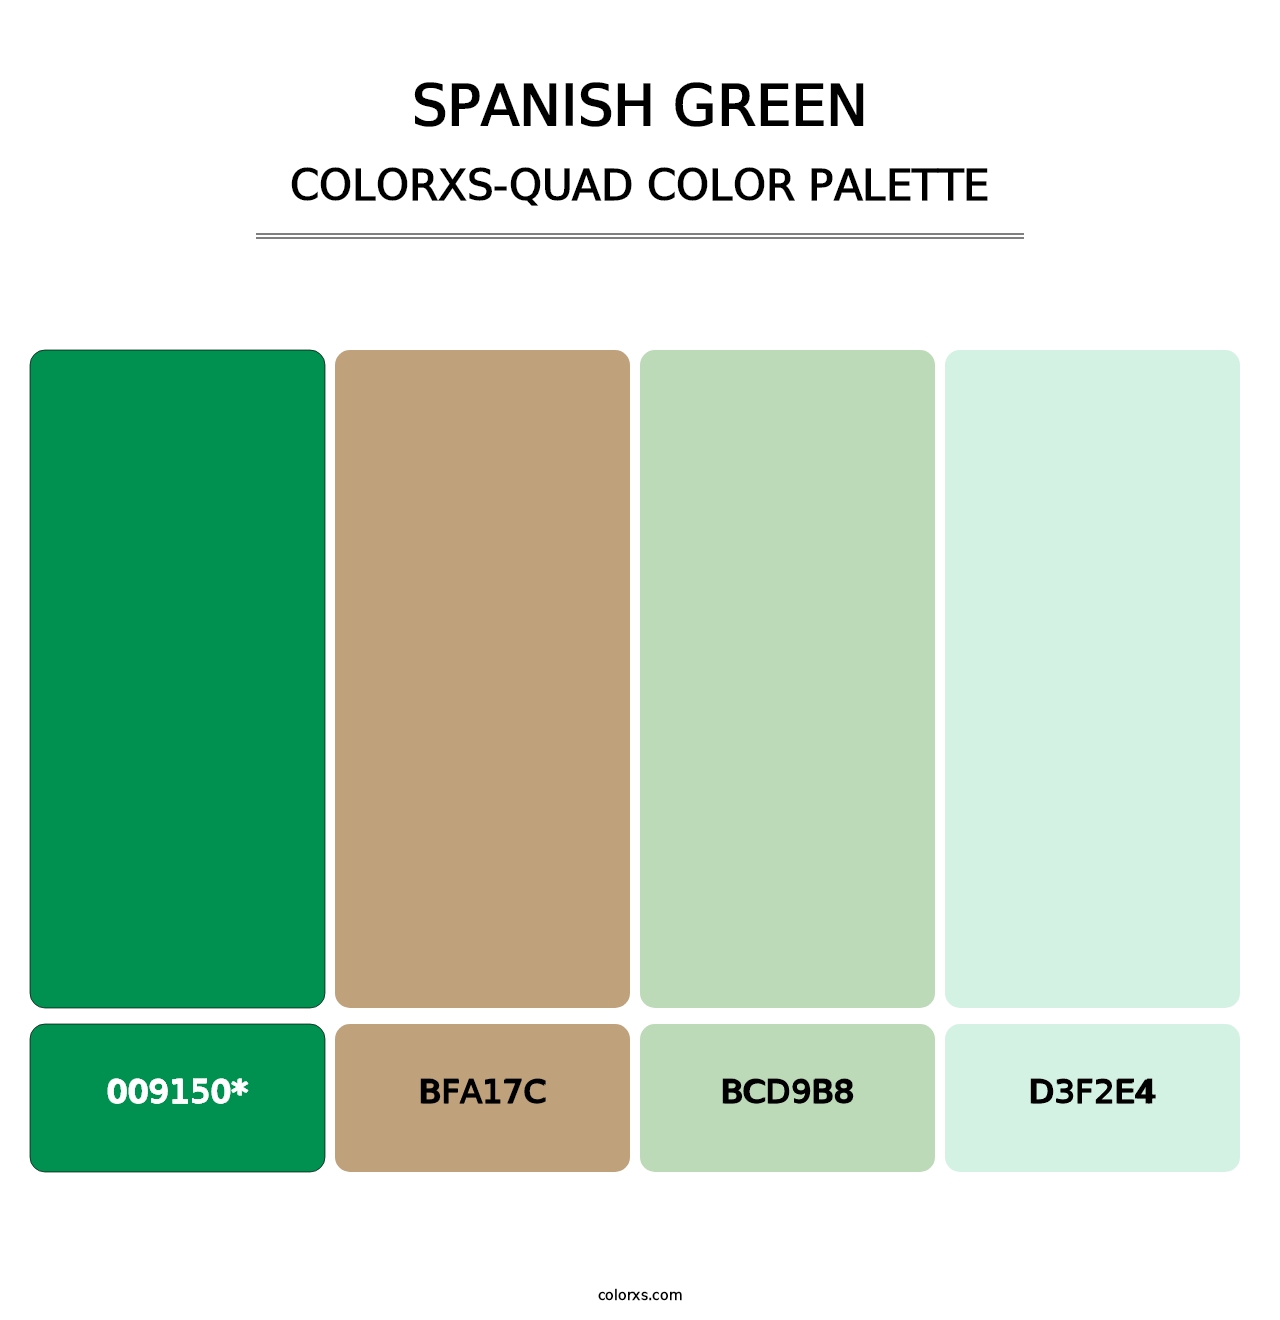 Spanish Green - Colorxs Quad Palette